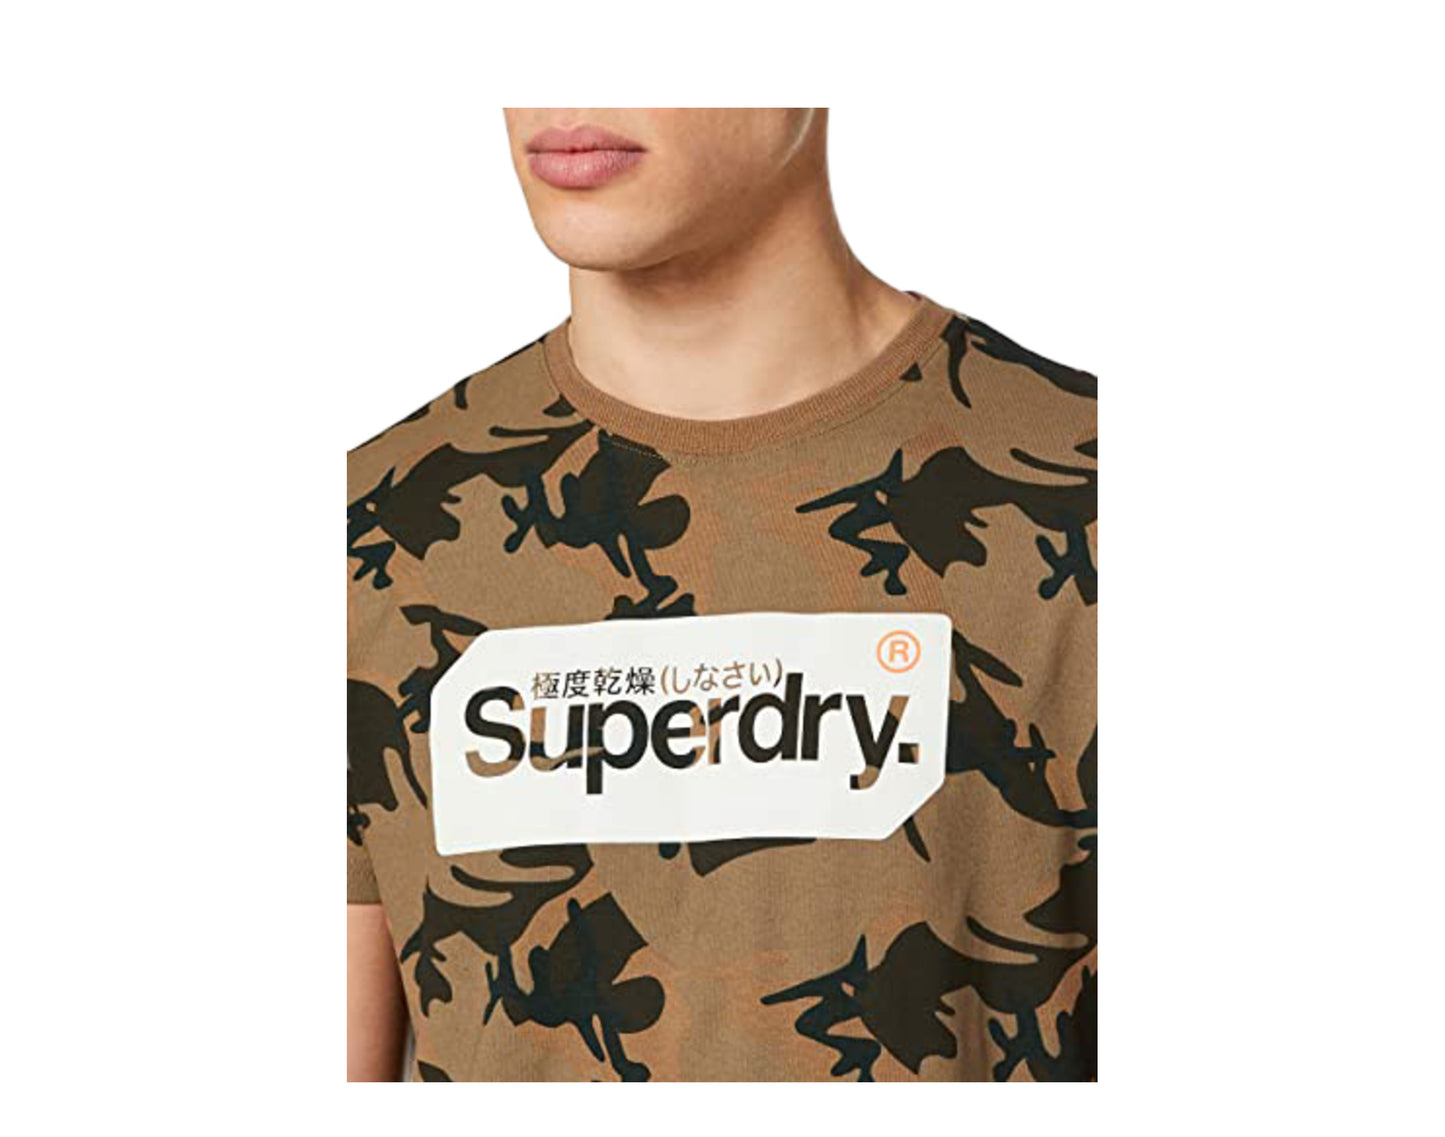 Superdry Core Logo Tag Camo AOP Army Camo Men's T-Shirt M1010083A-ARMY